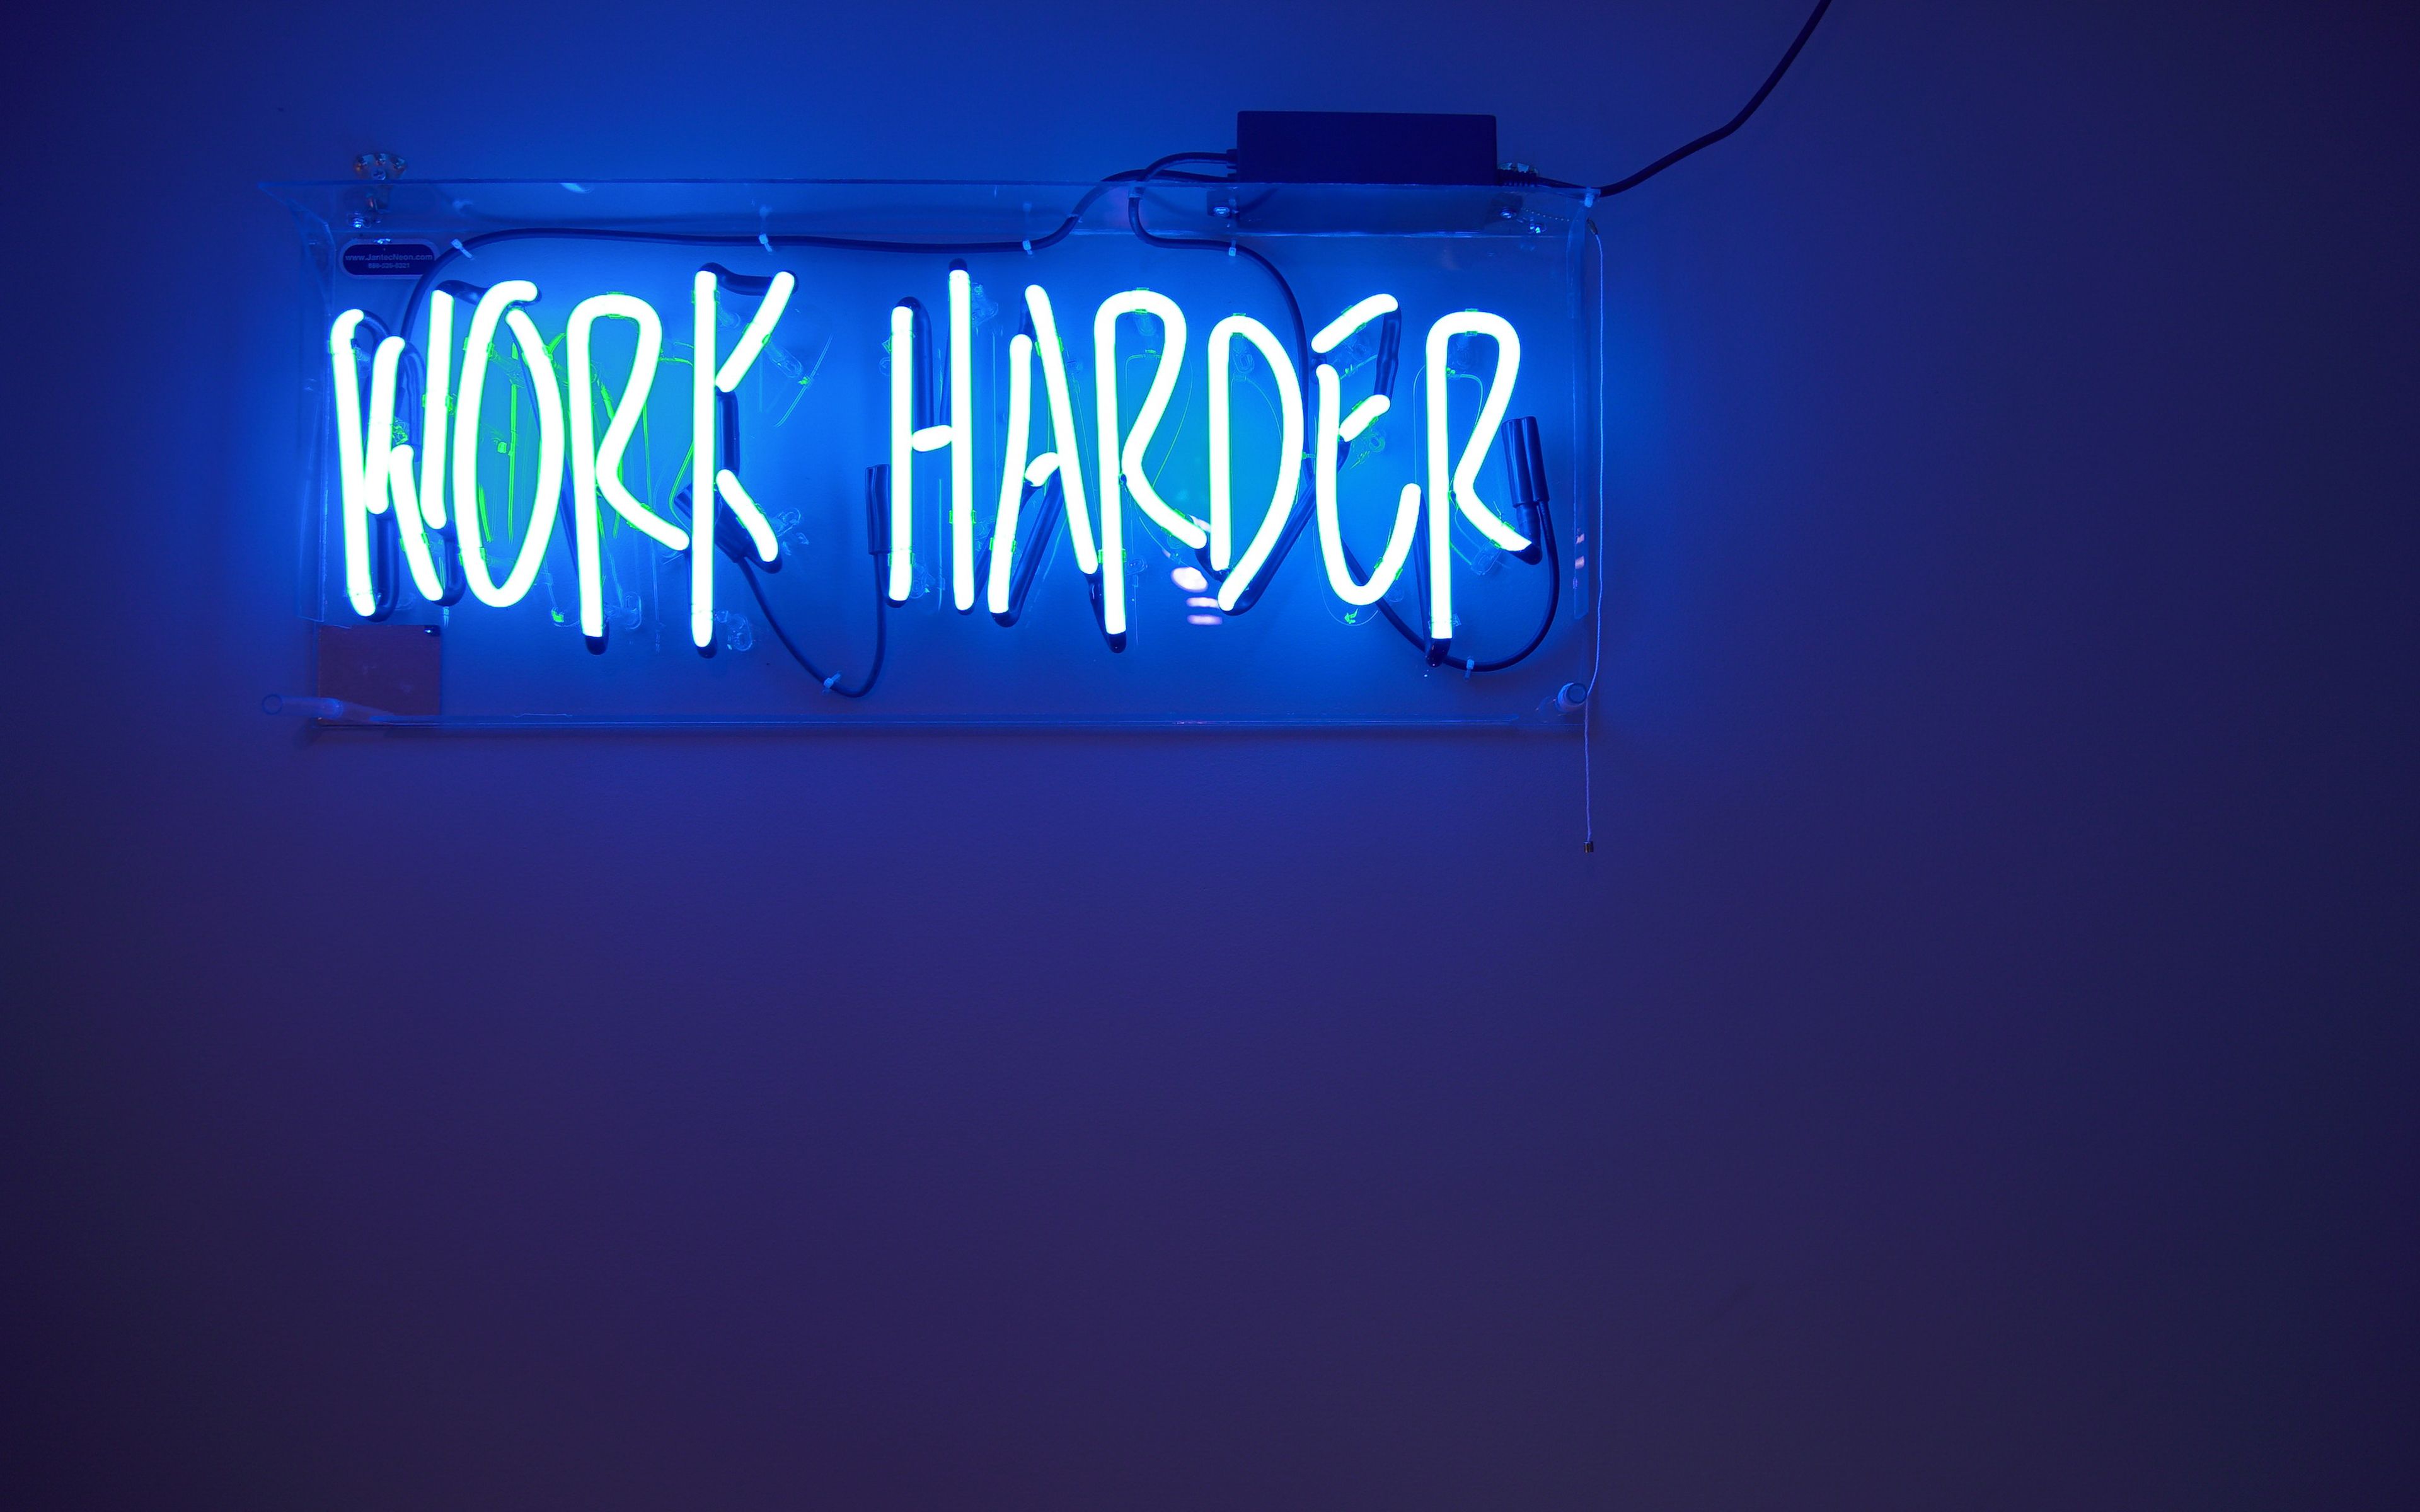 Work Harder Neon Sign 4K Wallpaper